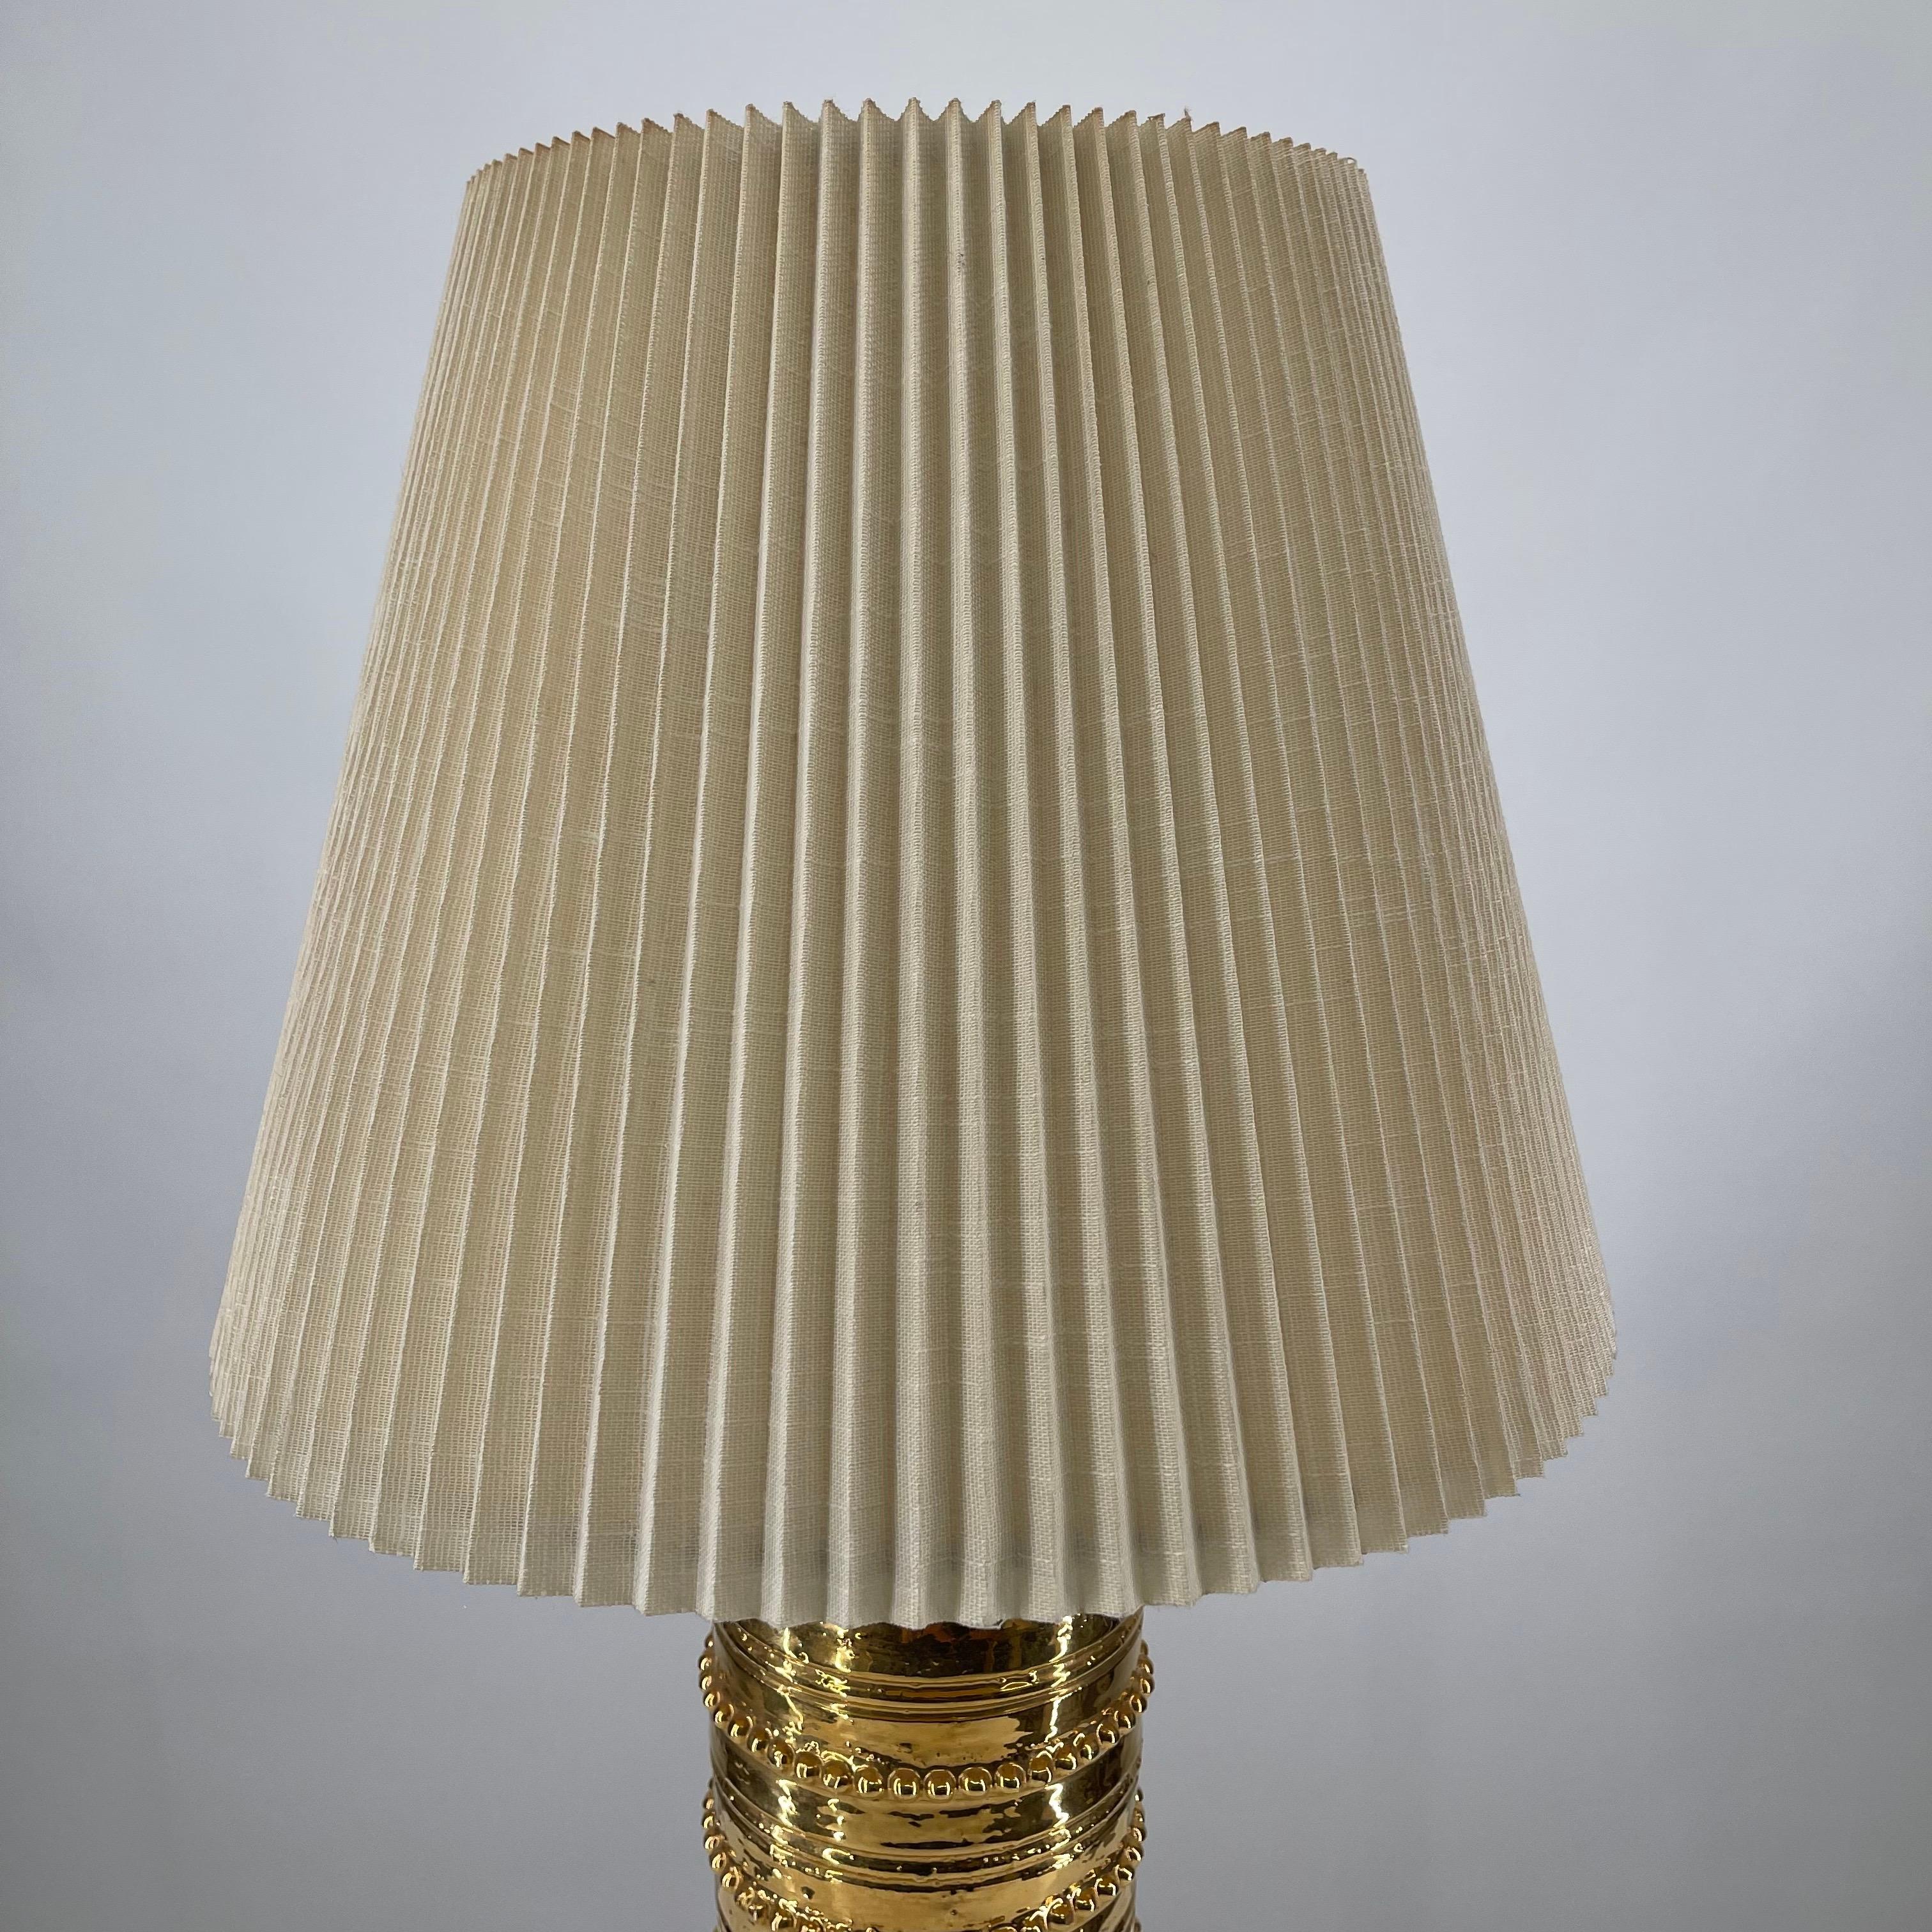 1 of 3 Bitossi Gold Glazed Ceramic Table Lamp by Miranda of Sweden, 1965 For Sale 6